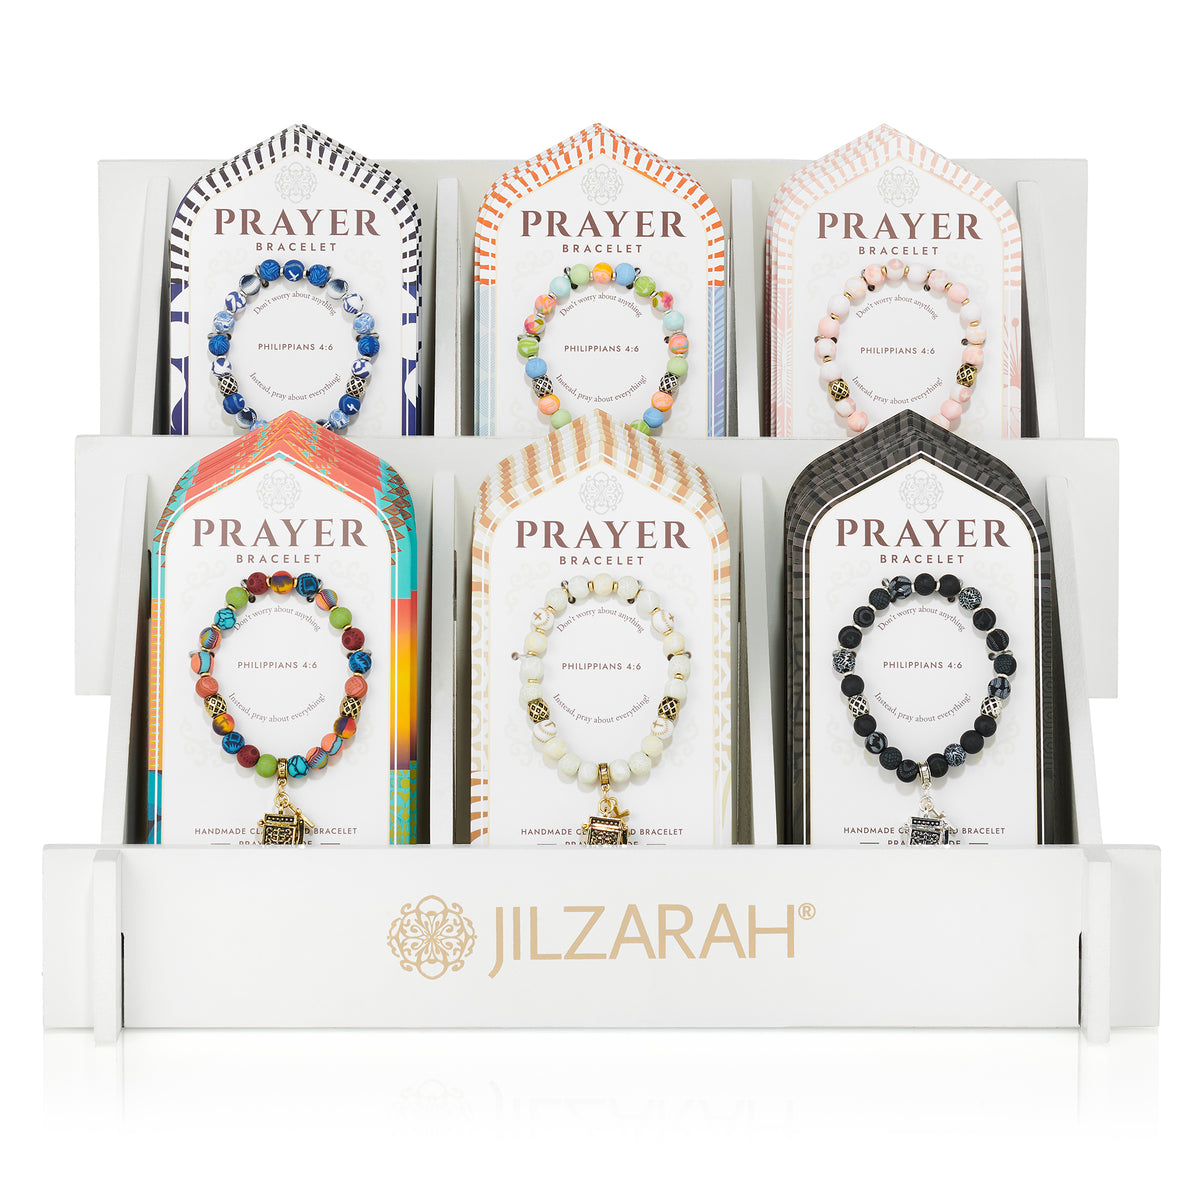 Prayer Bracelet Complete Collection